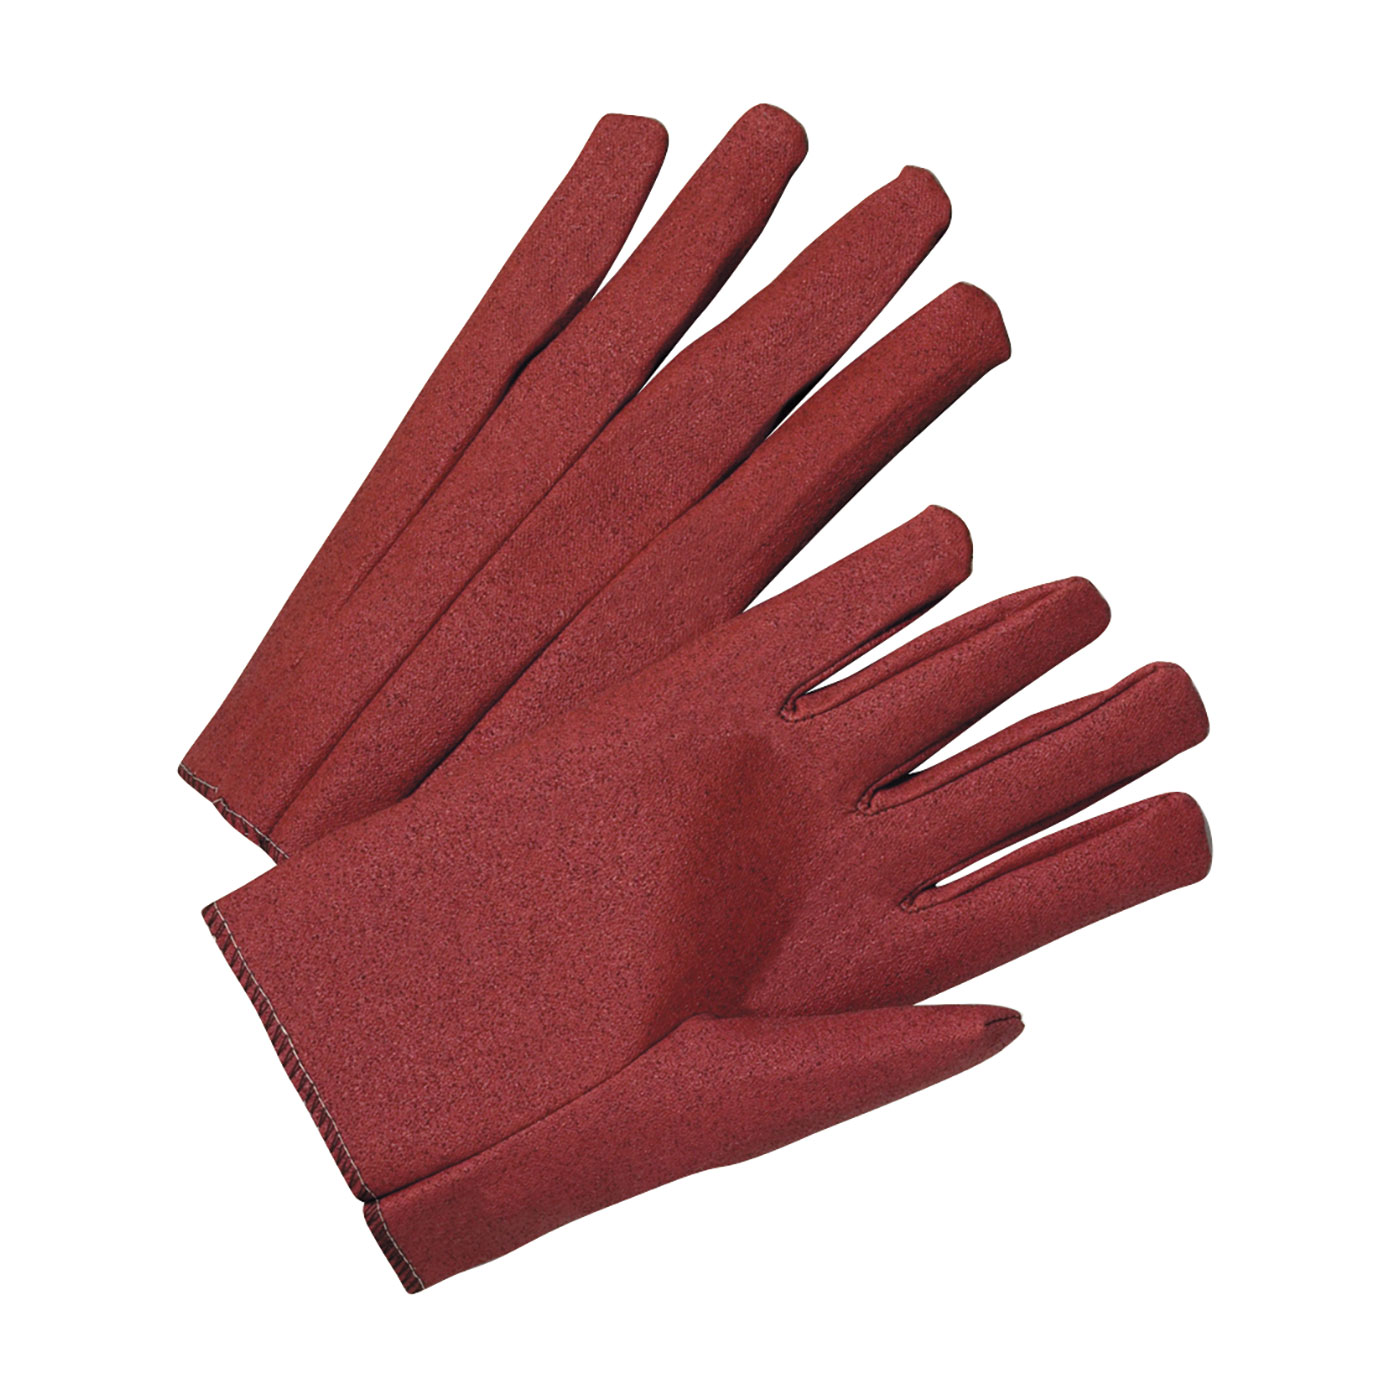 Vinyl Impregnated Coated Work Gloves